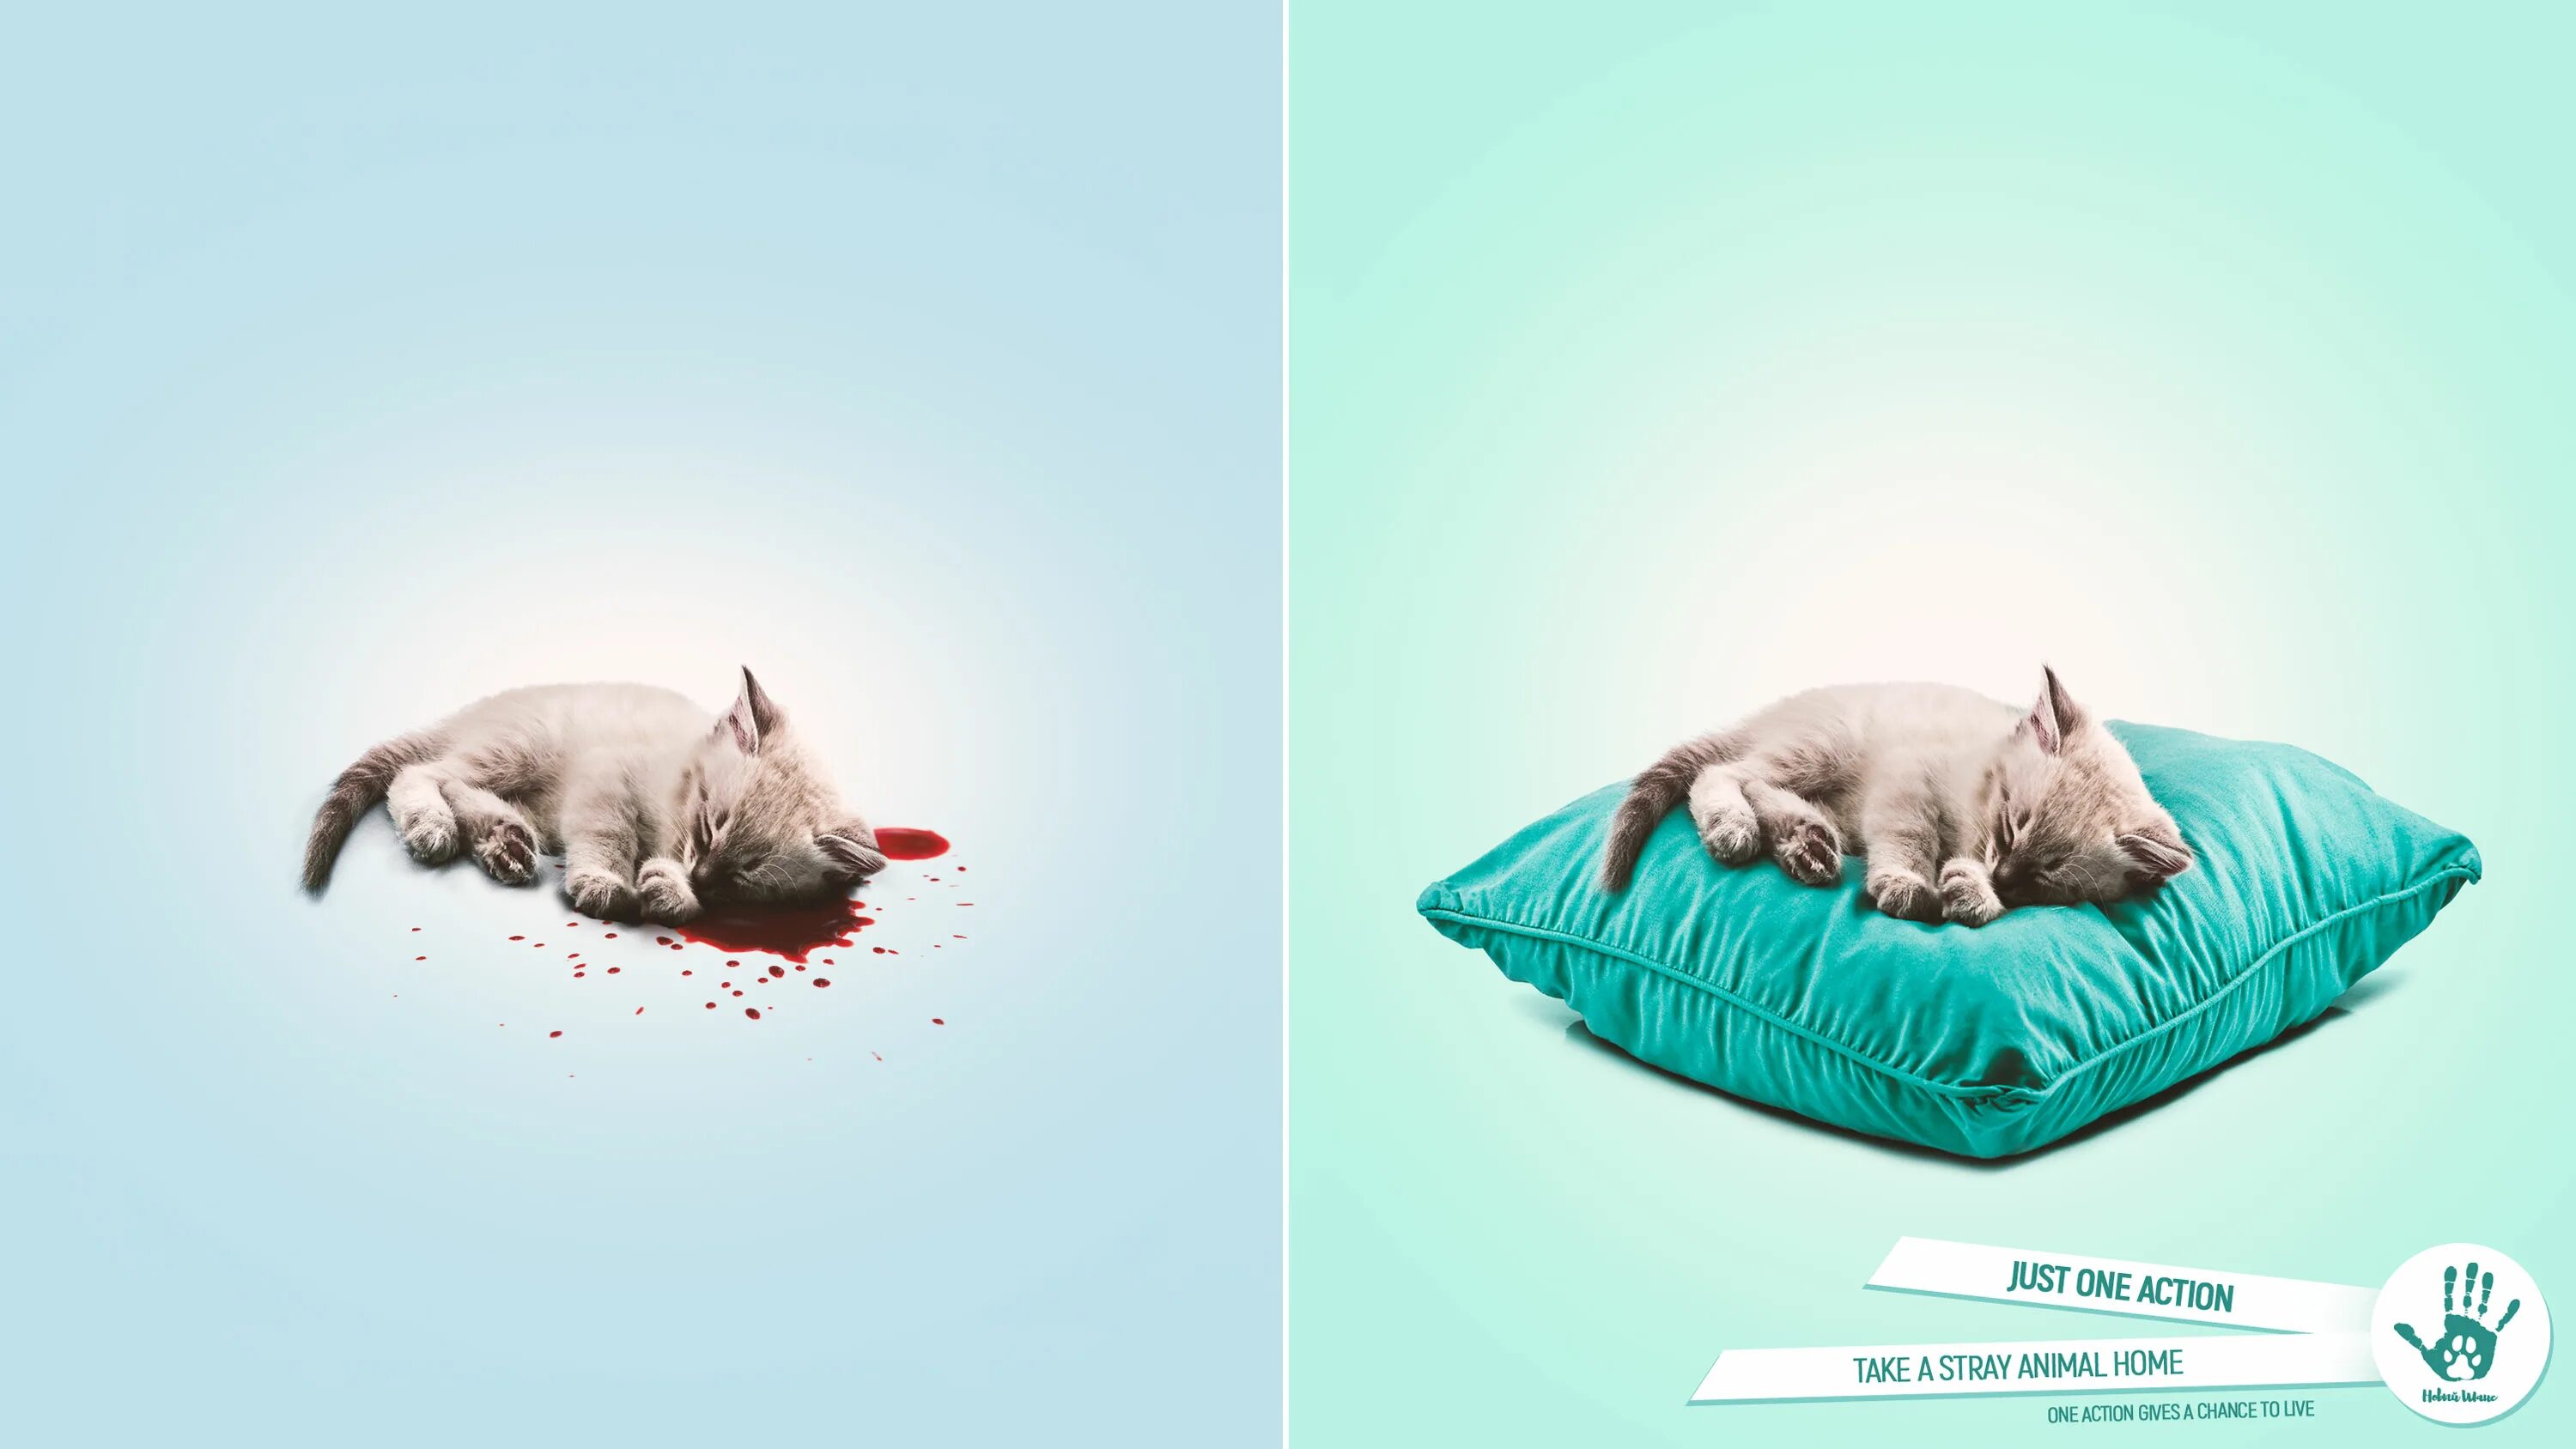 Реклама с животными. Социальная реклама животные. Социальная реклама про бездомных животных. Stray animals. Some animals go to a shelter